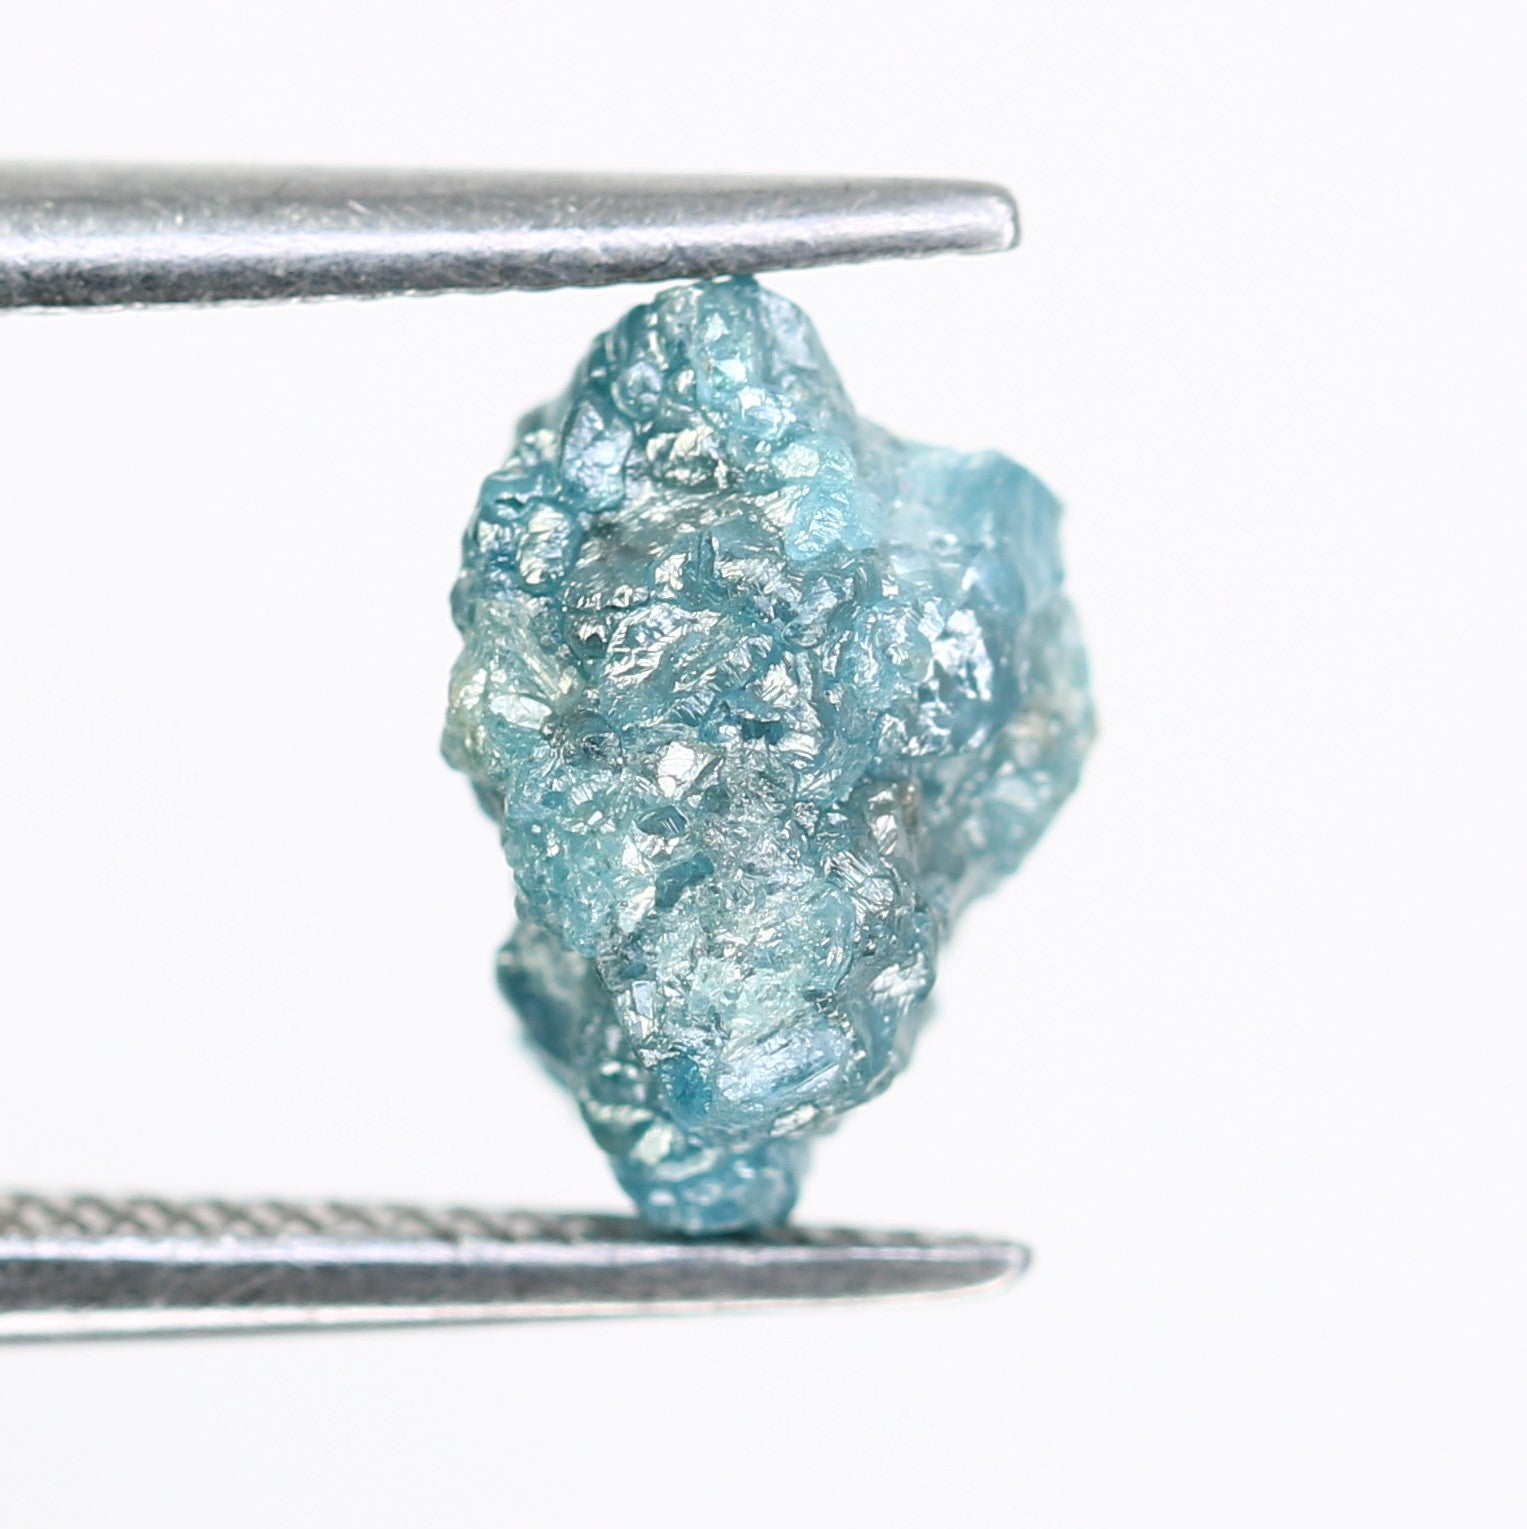 Raw Irregular Shape 2.26 CT Rough Blue Uncut Diamond For Promise Ring